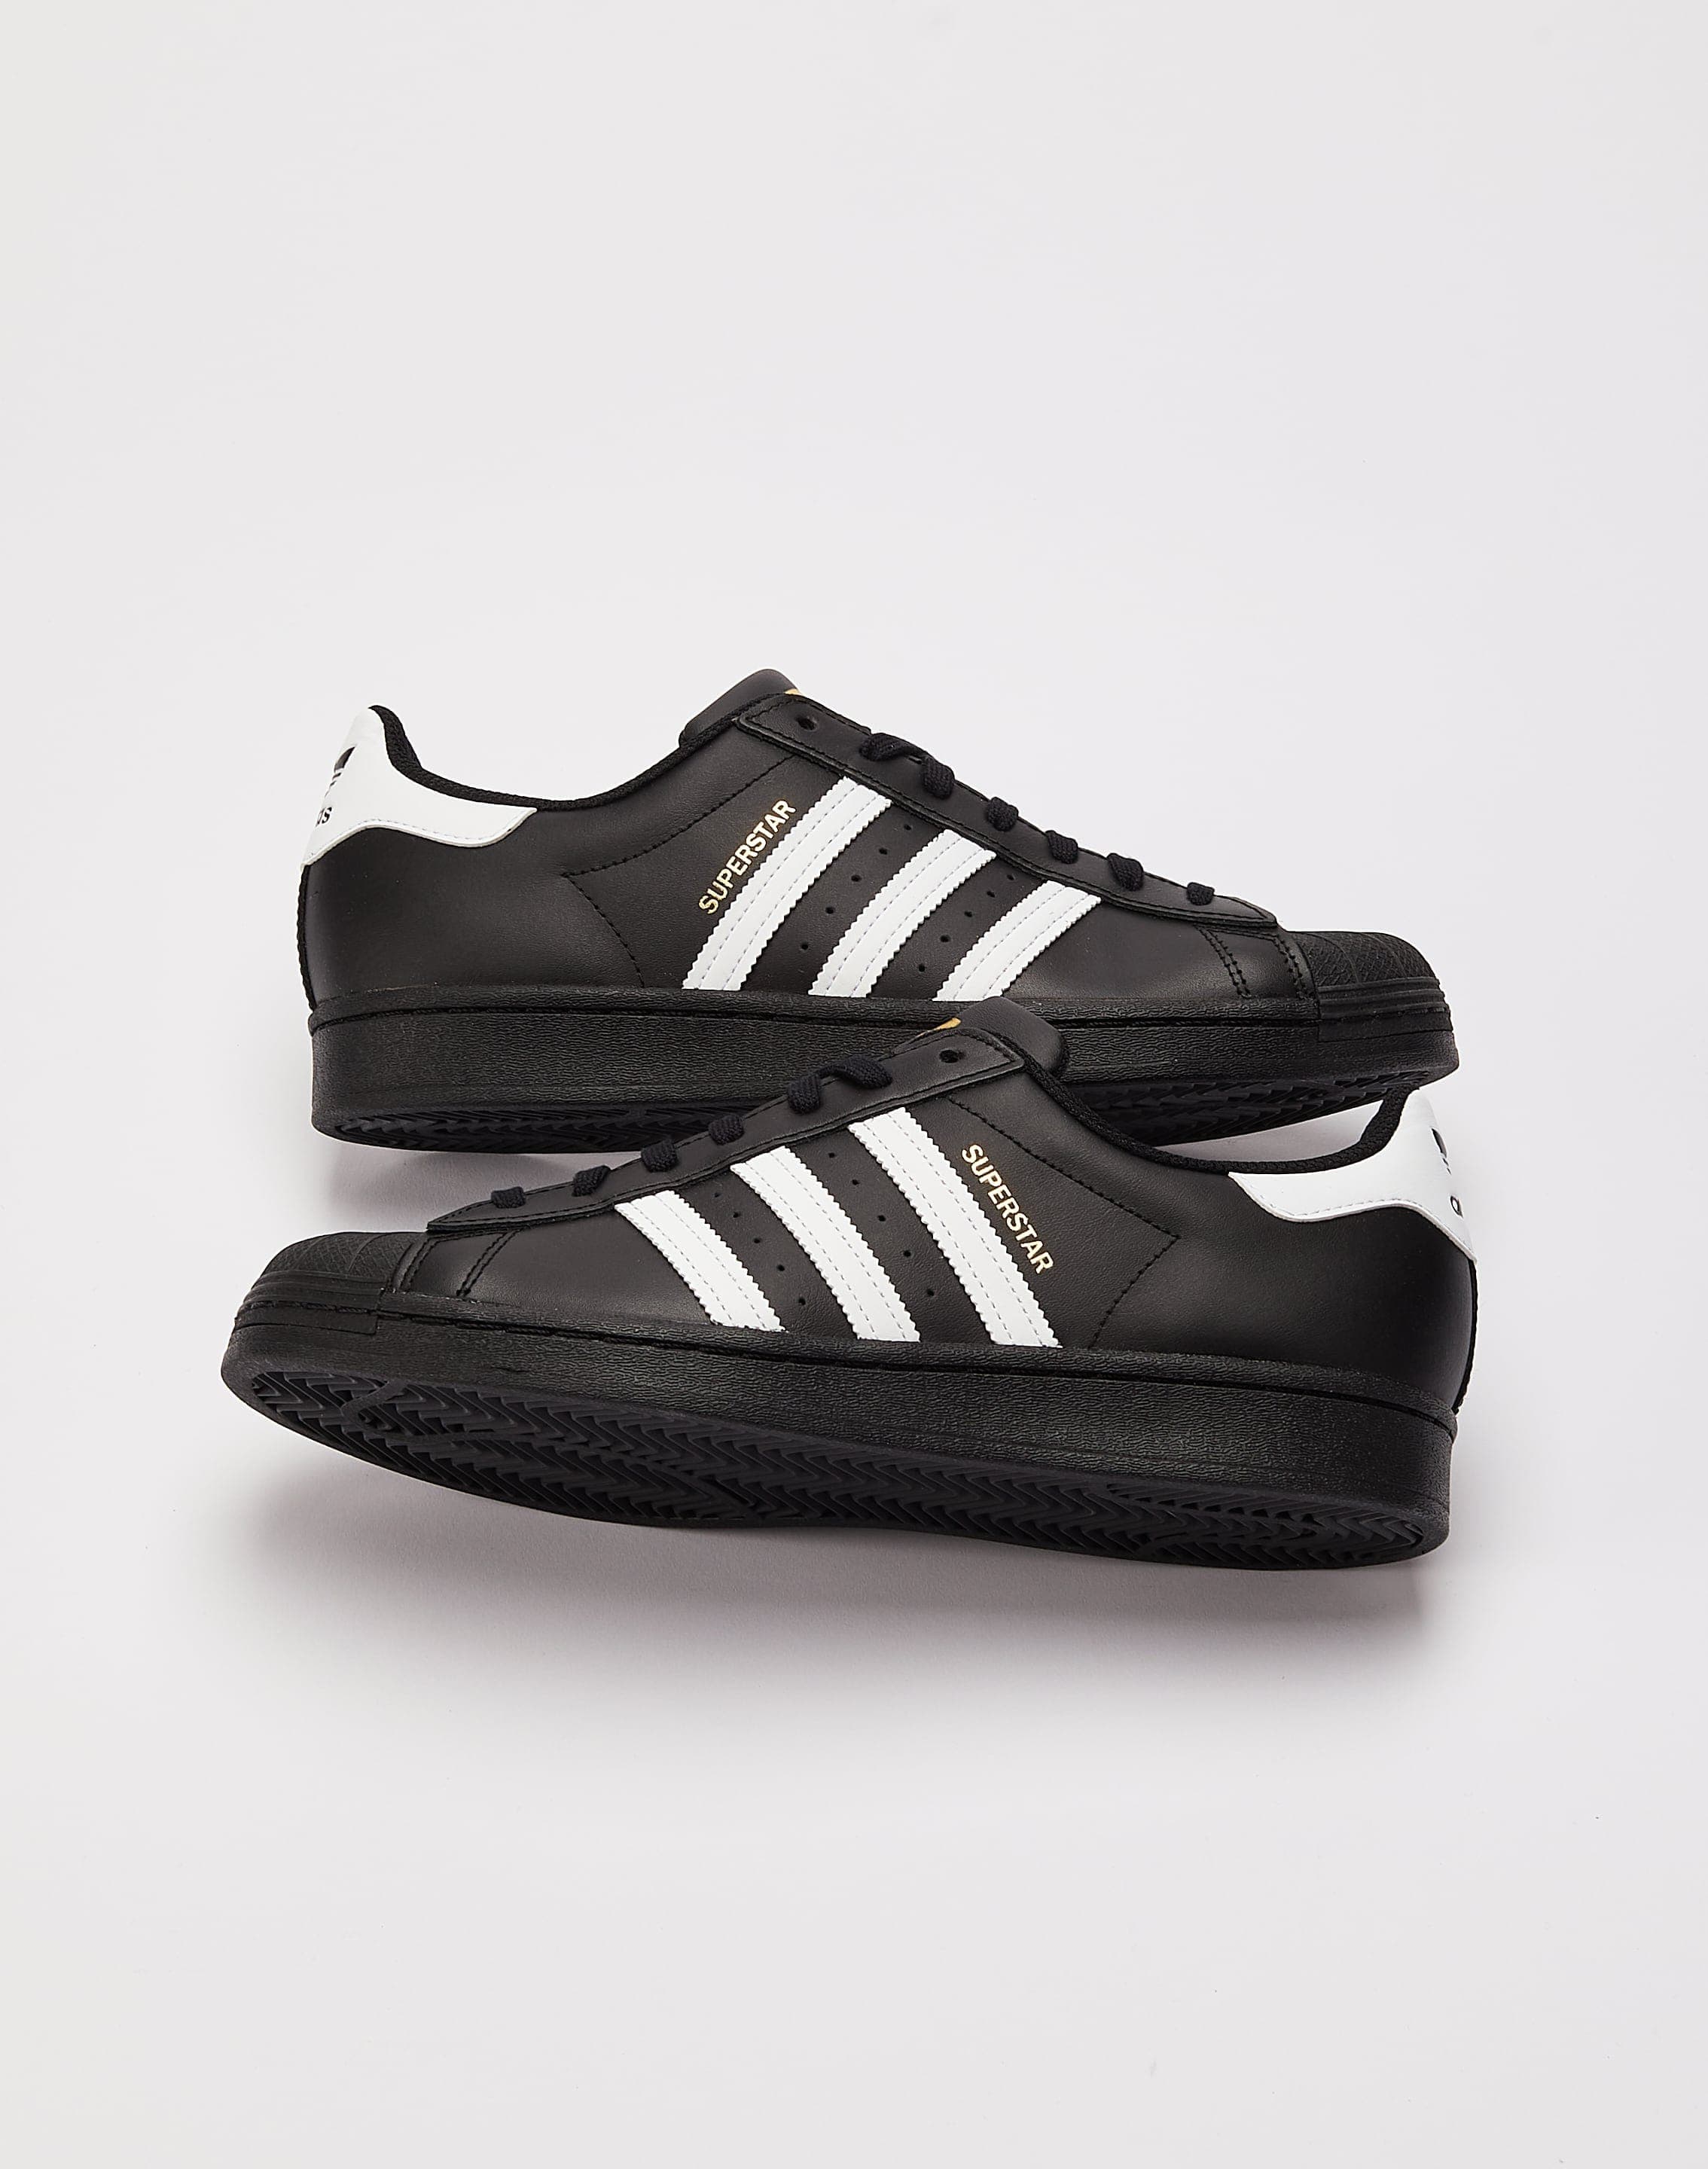 Adidas Gazelle Indoor Core Black Sneakers · Free Stock Photo